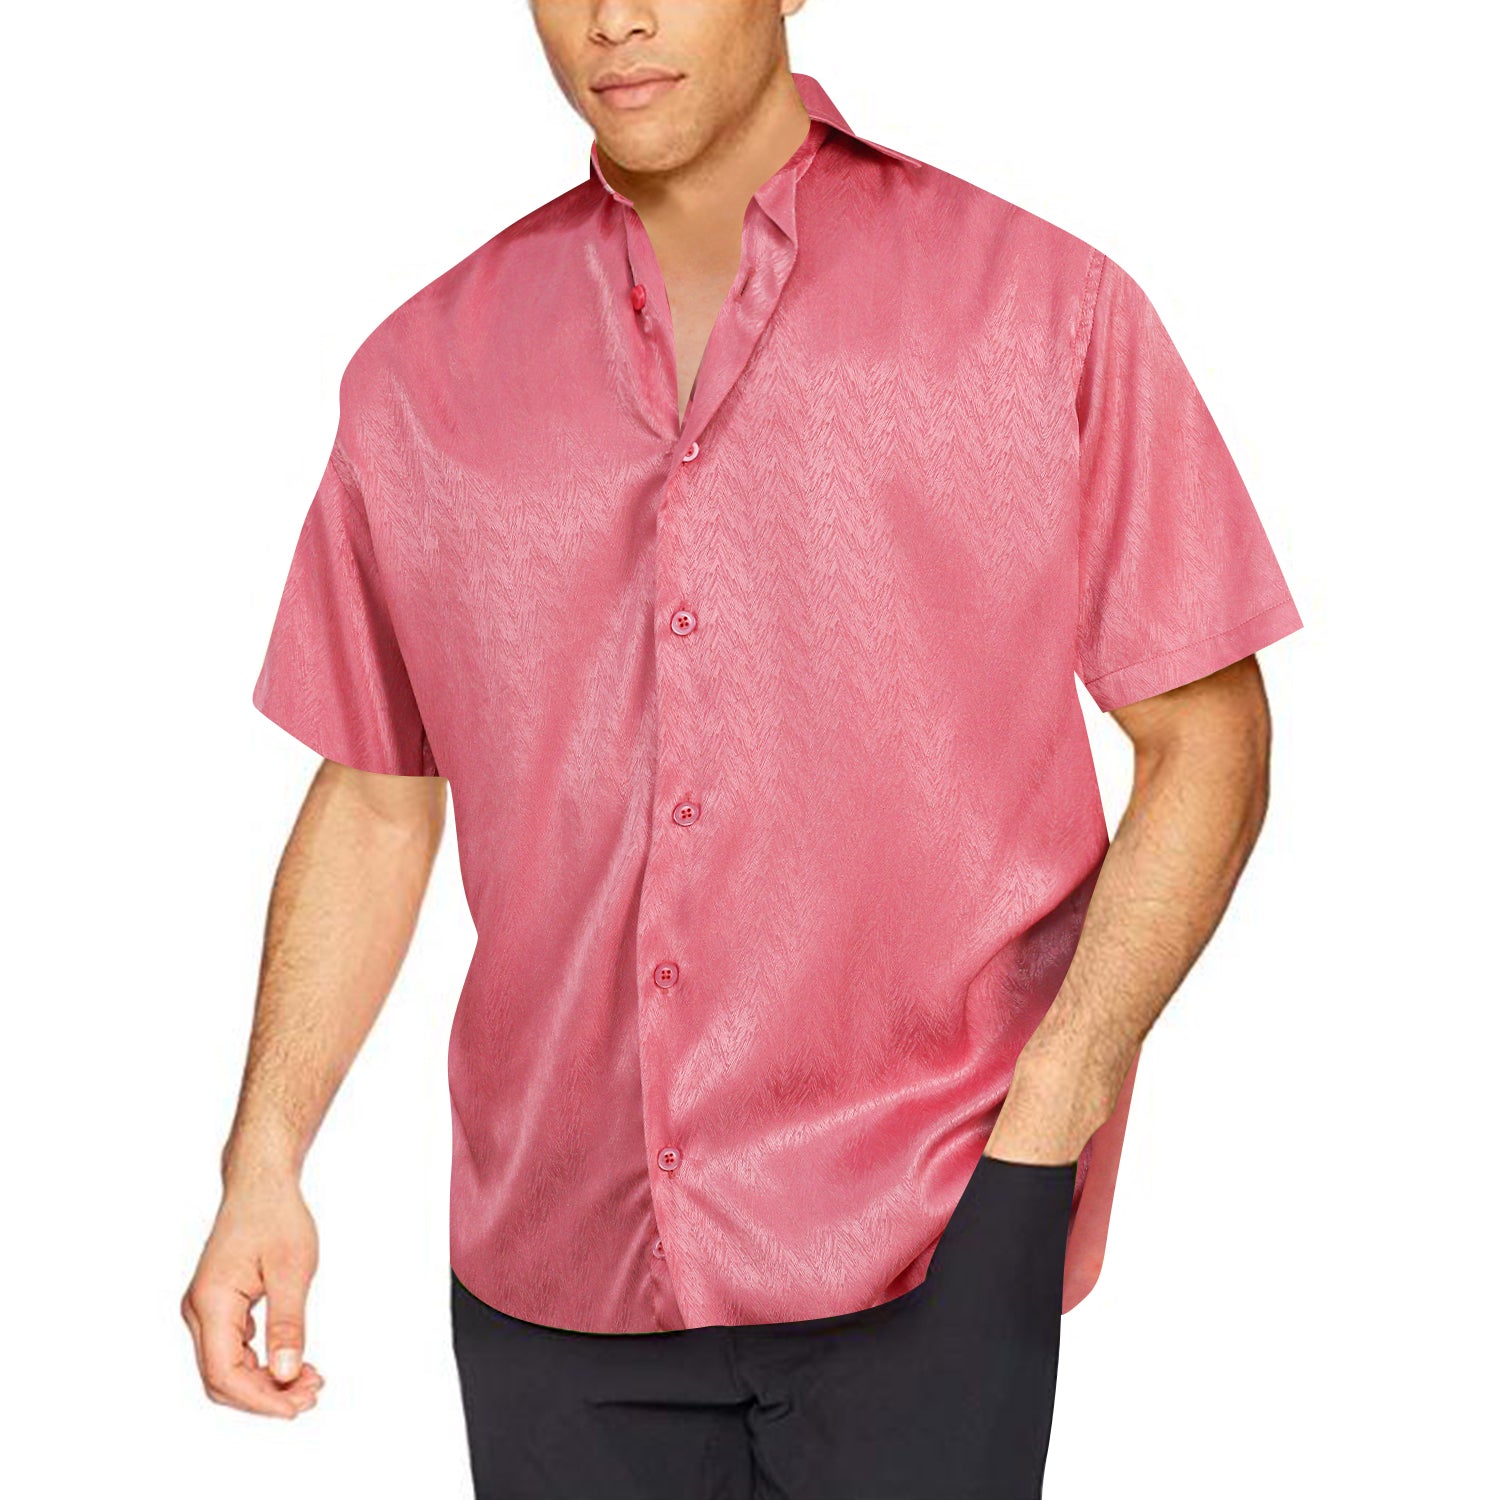 Men wearing a pink short sleeve shirt and dark grey pants 